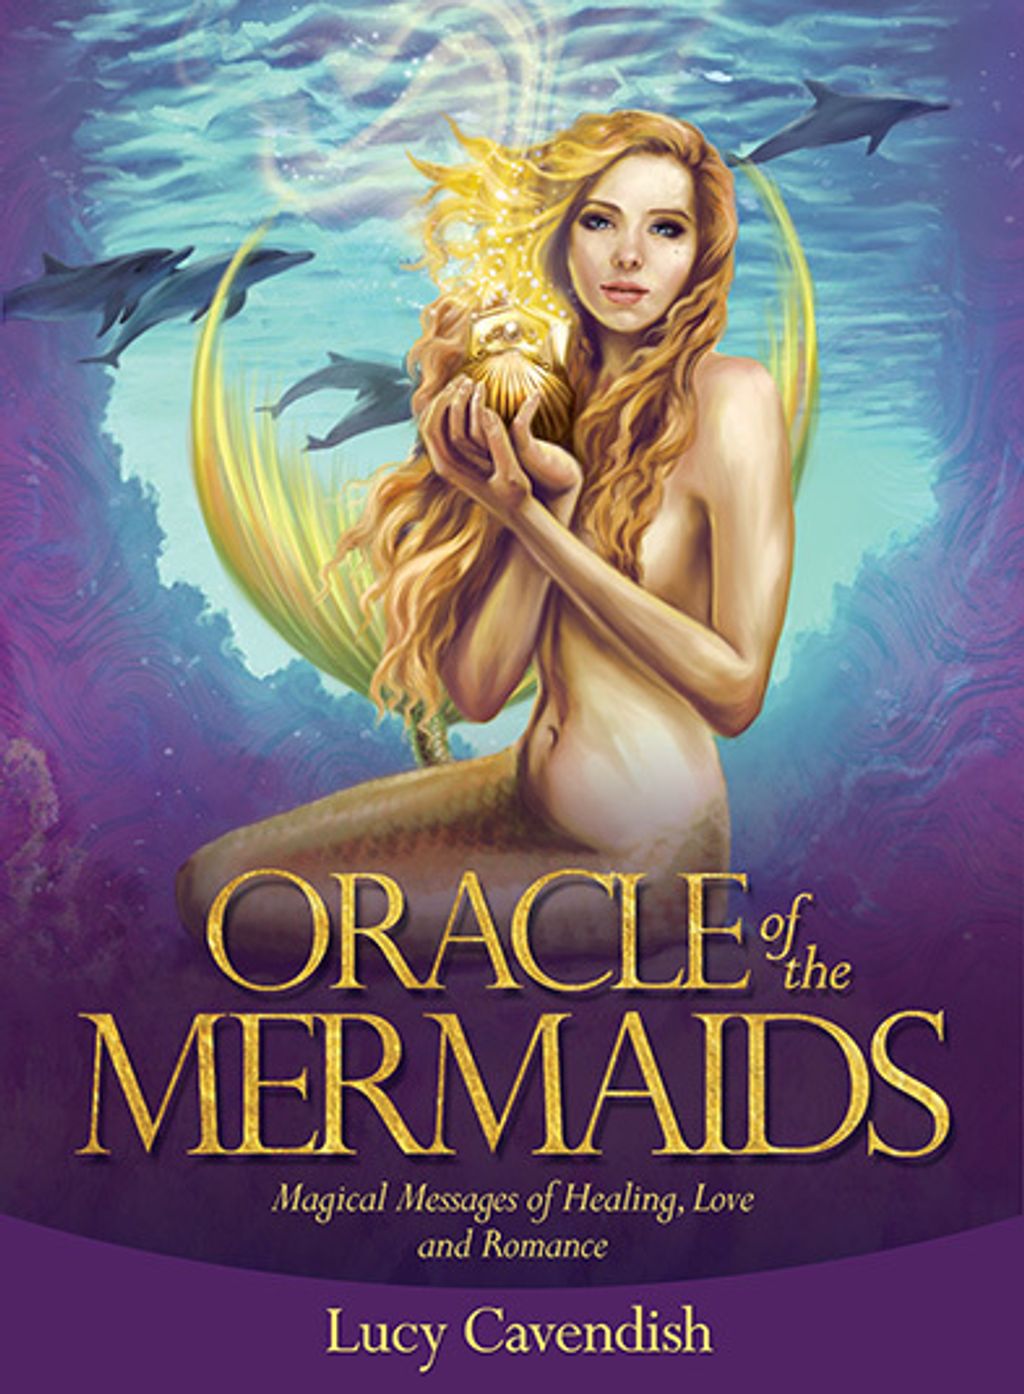 神奇美人魚神諭卡： Oracle of the Mermaids.jpg